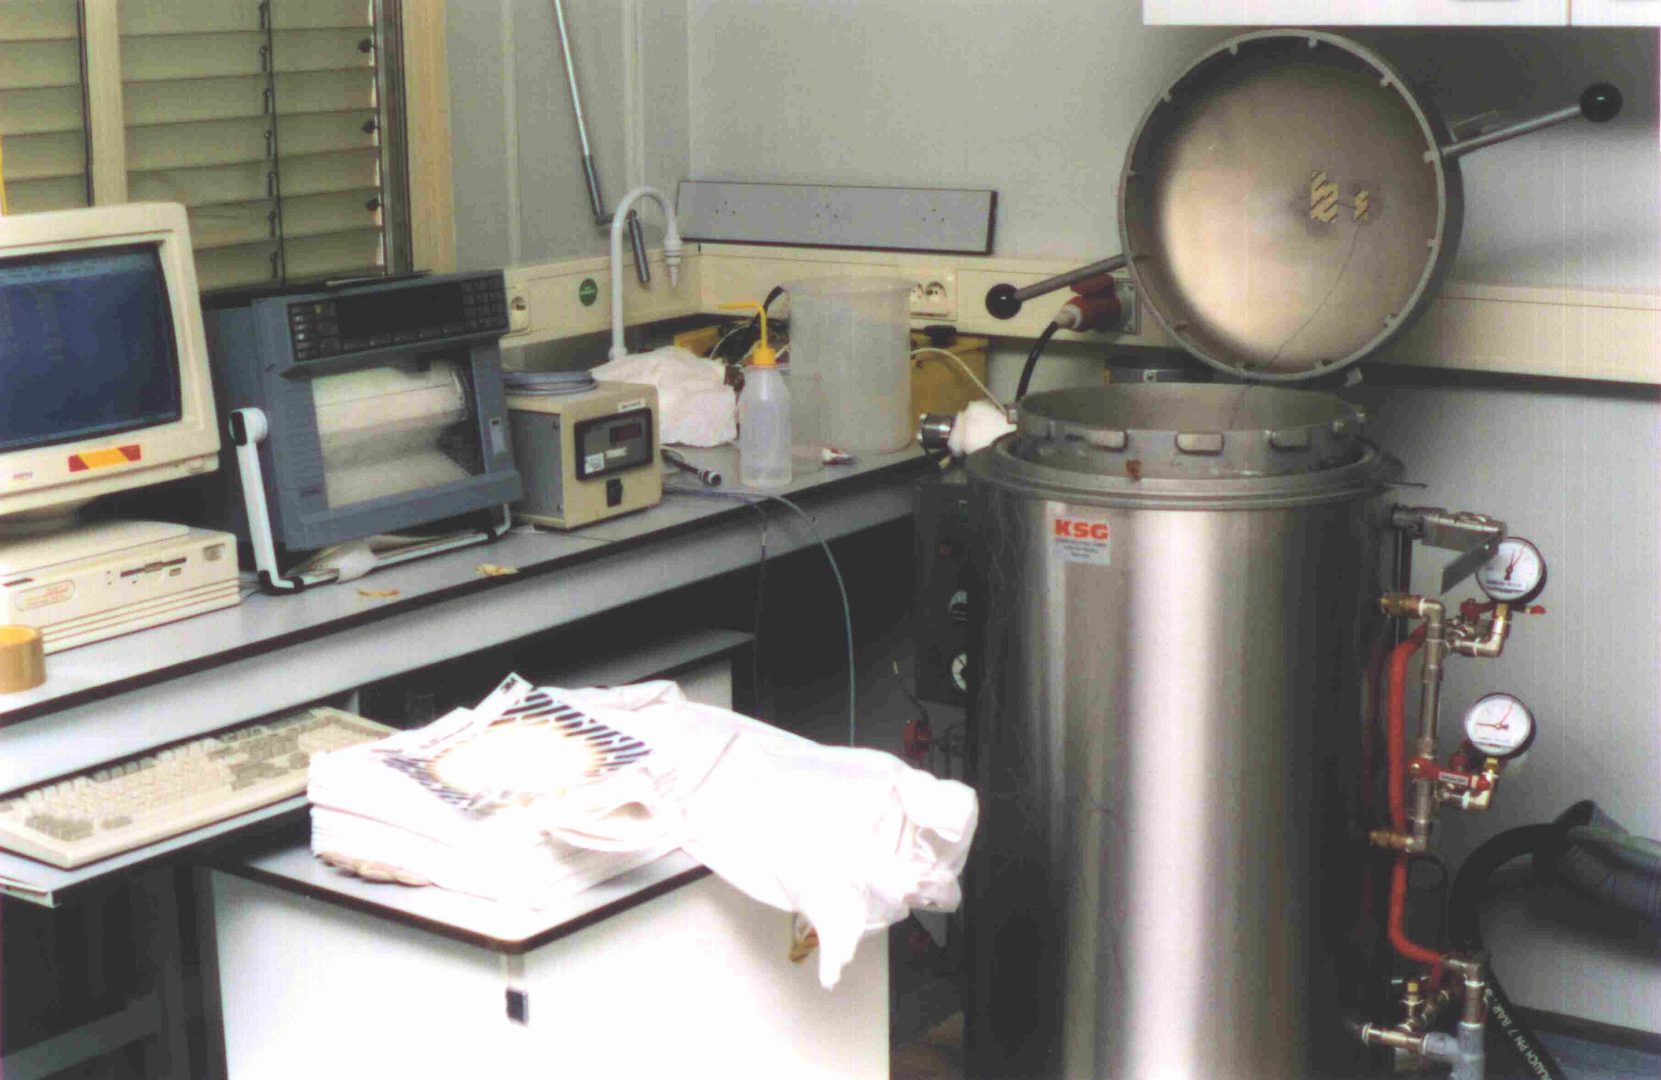 NL-BilthovenRIVM1999ResearchAutoclaveKSGLaboratoryTestEquipment